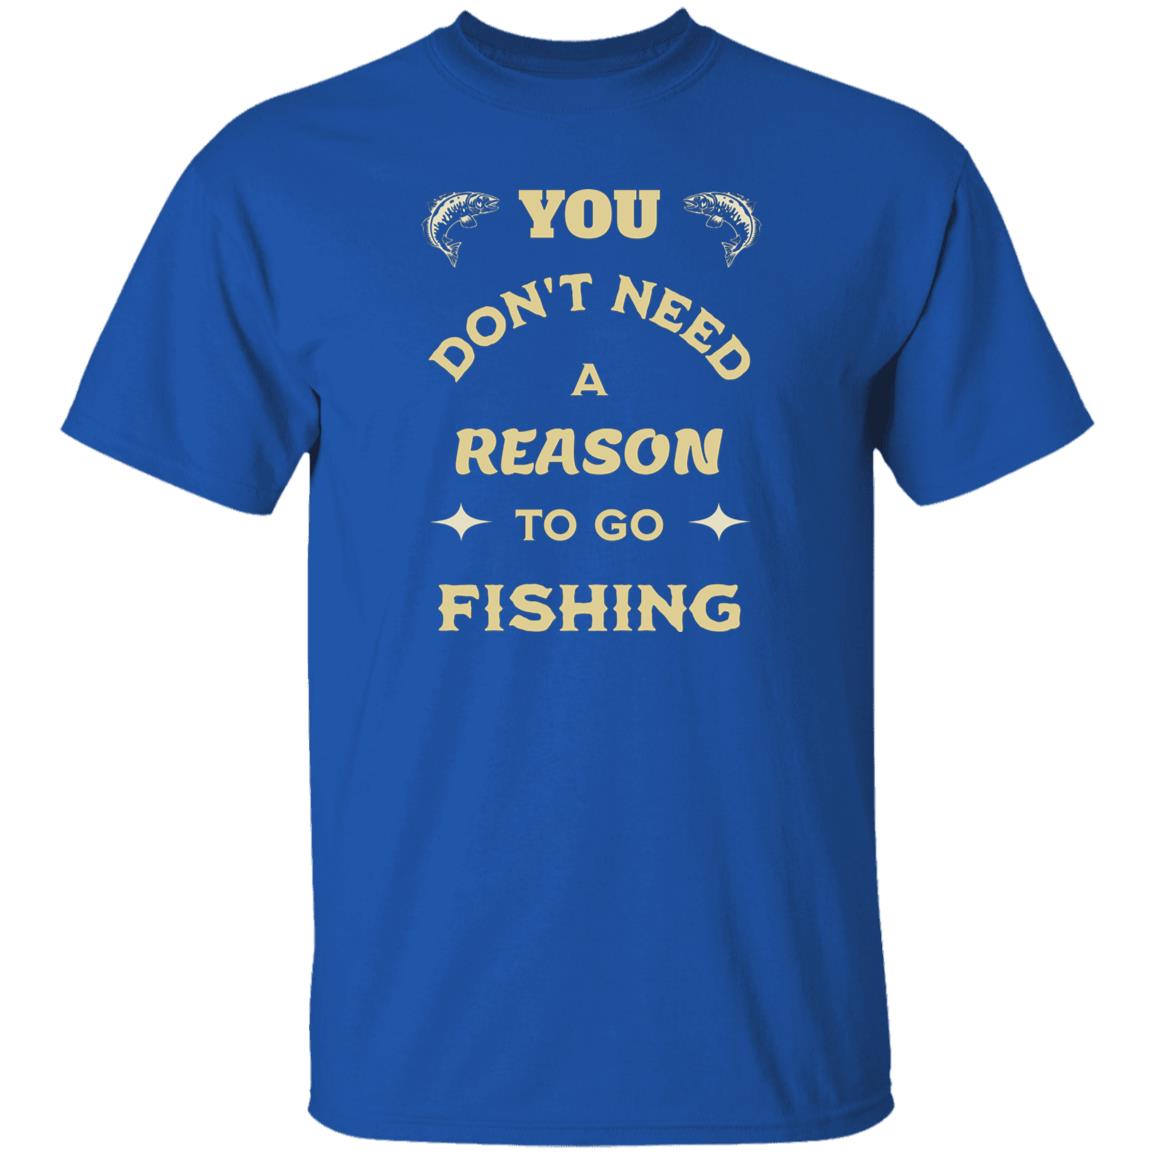 You don't need a reason to go fishing k t-shirt royal